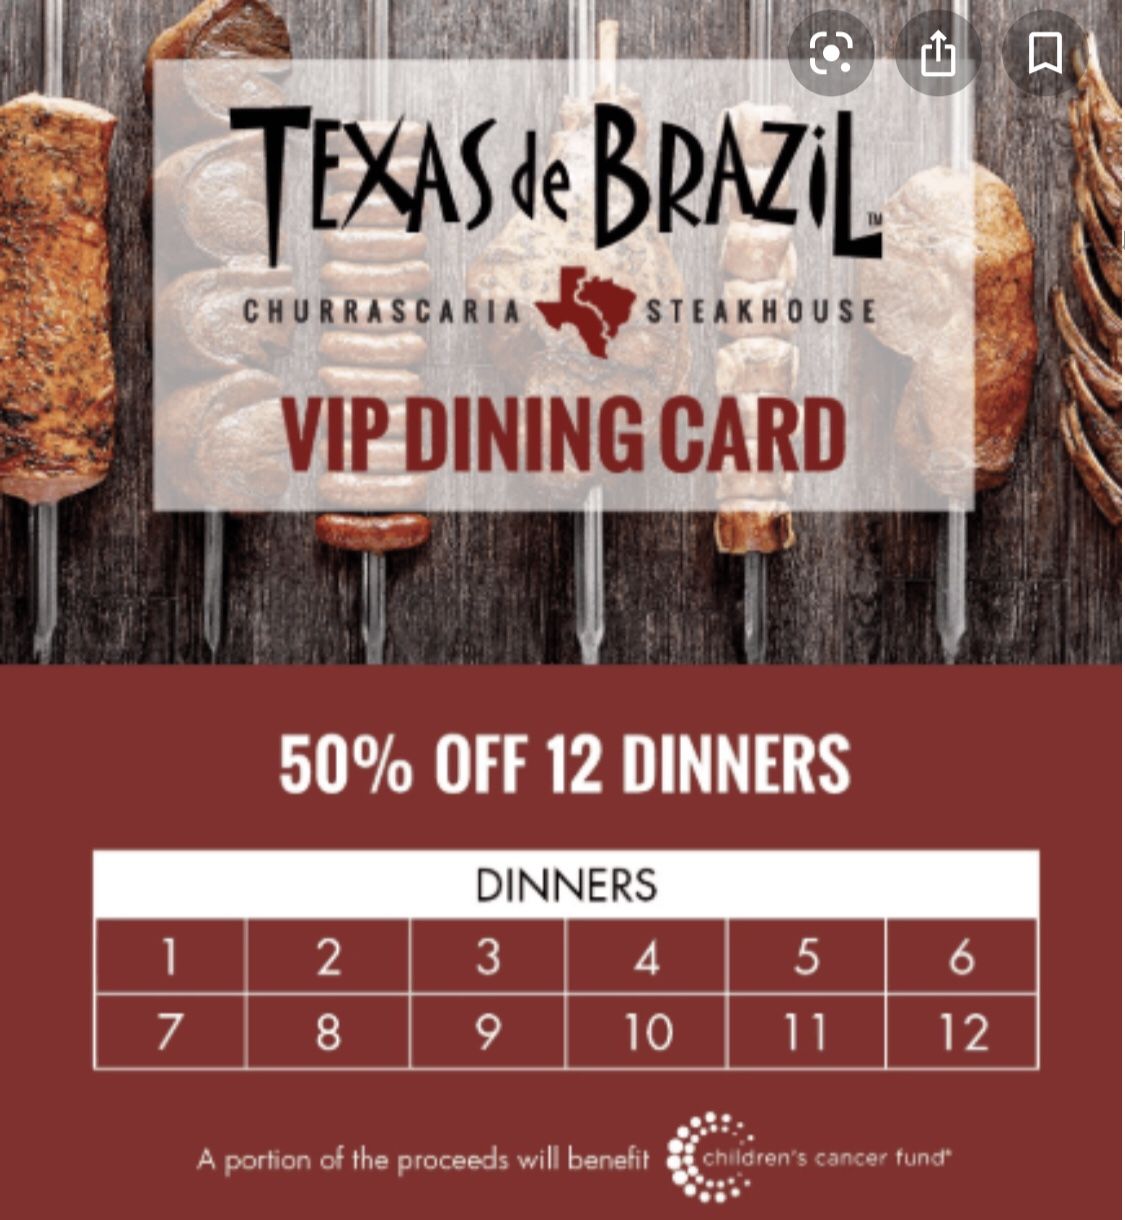 Texas de Brazil churrascaria steakhouse VIP card $300 value